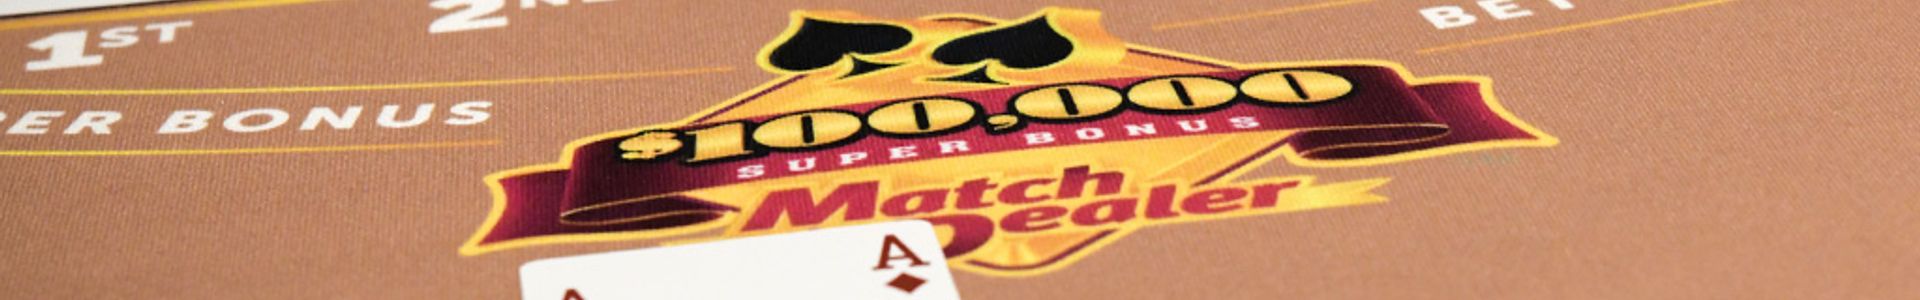 $100,000 Super Bonus Match the Dealer